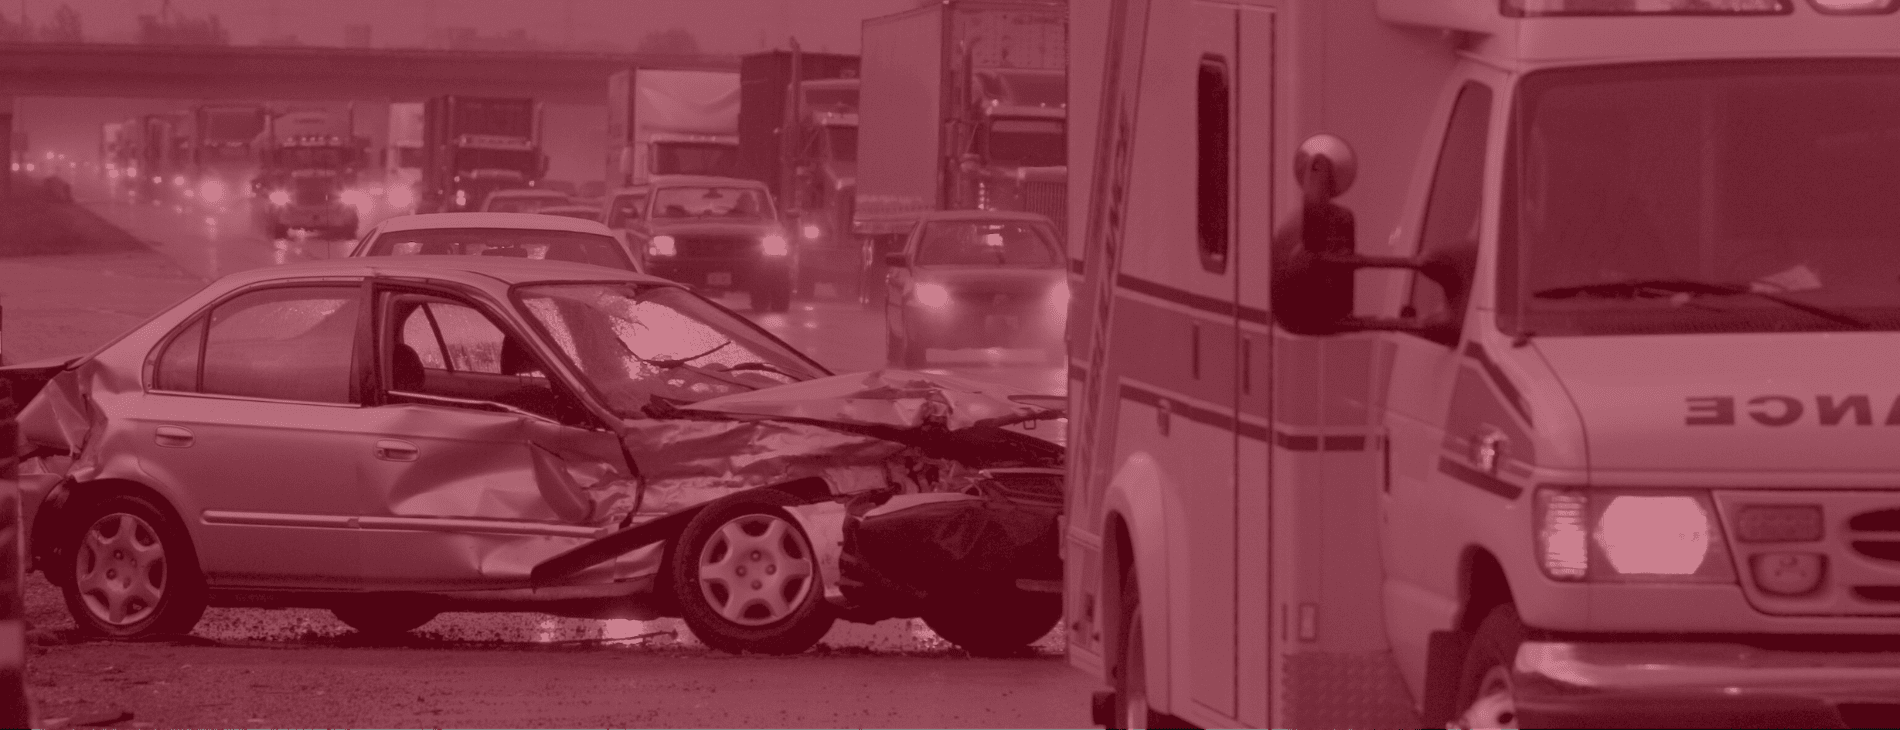 Fullerton car crash